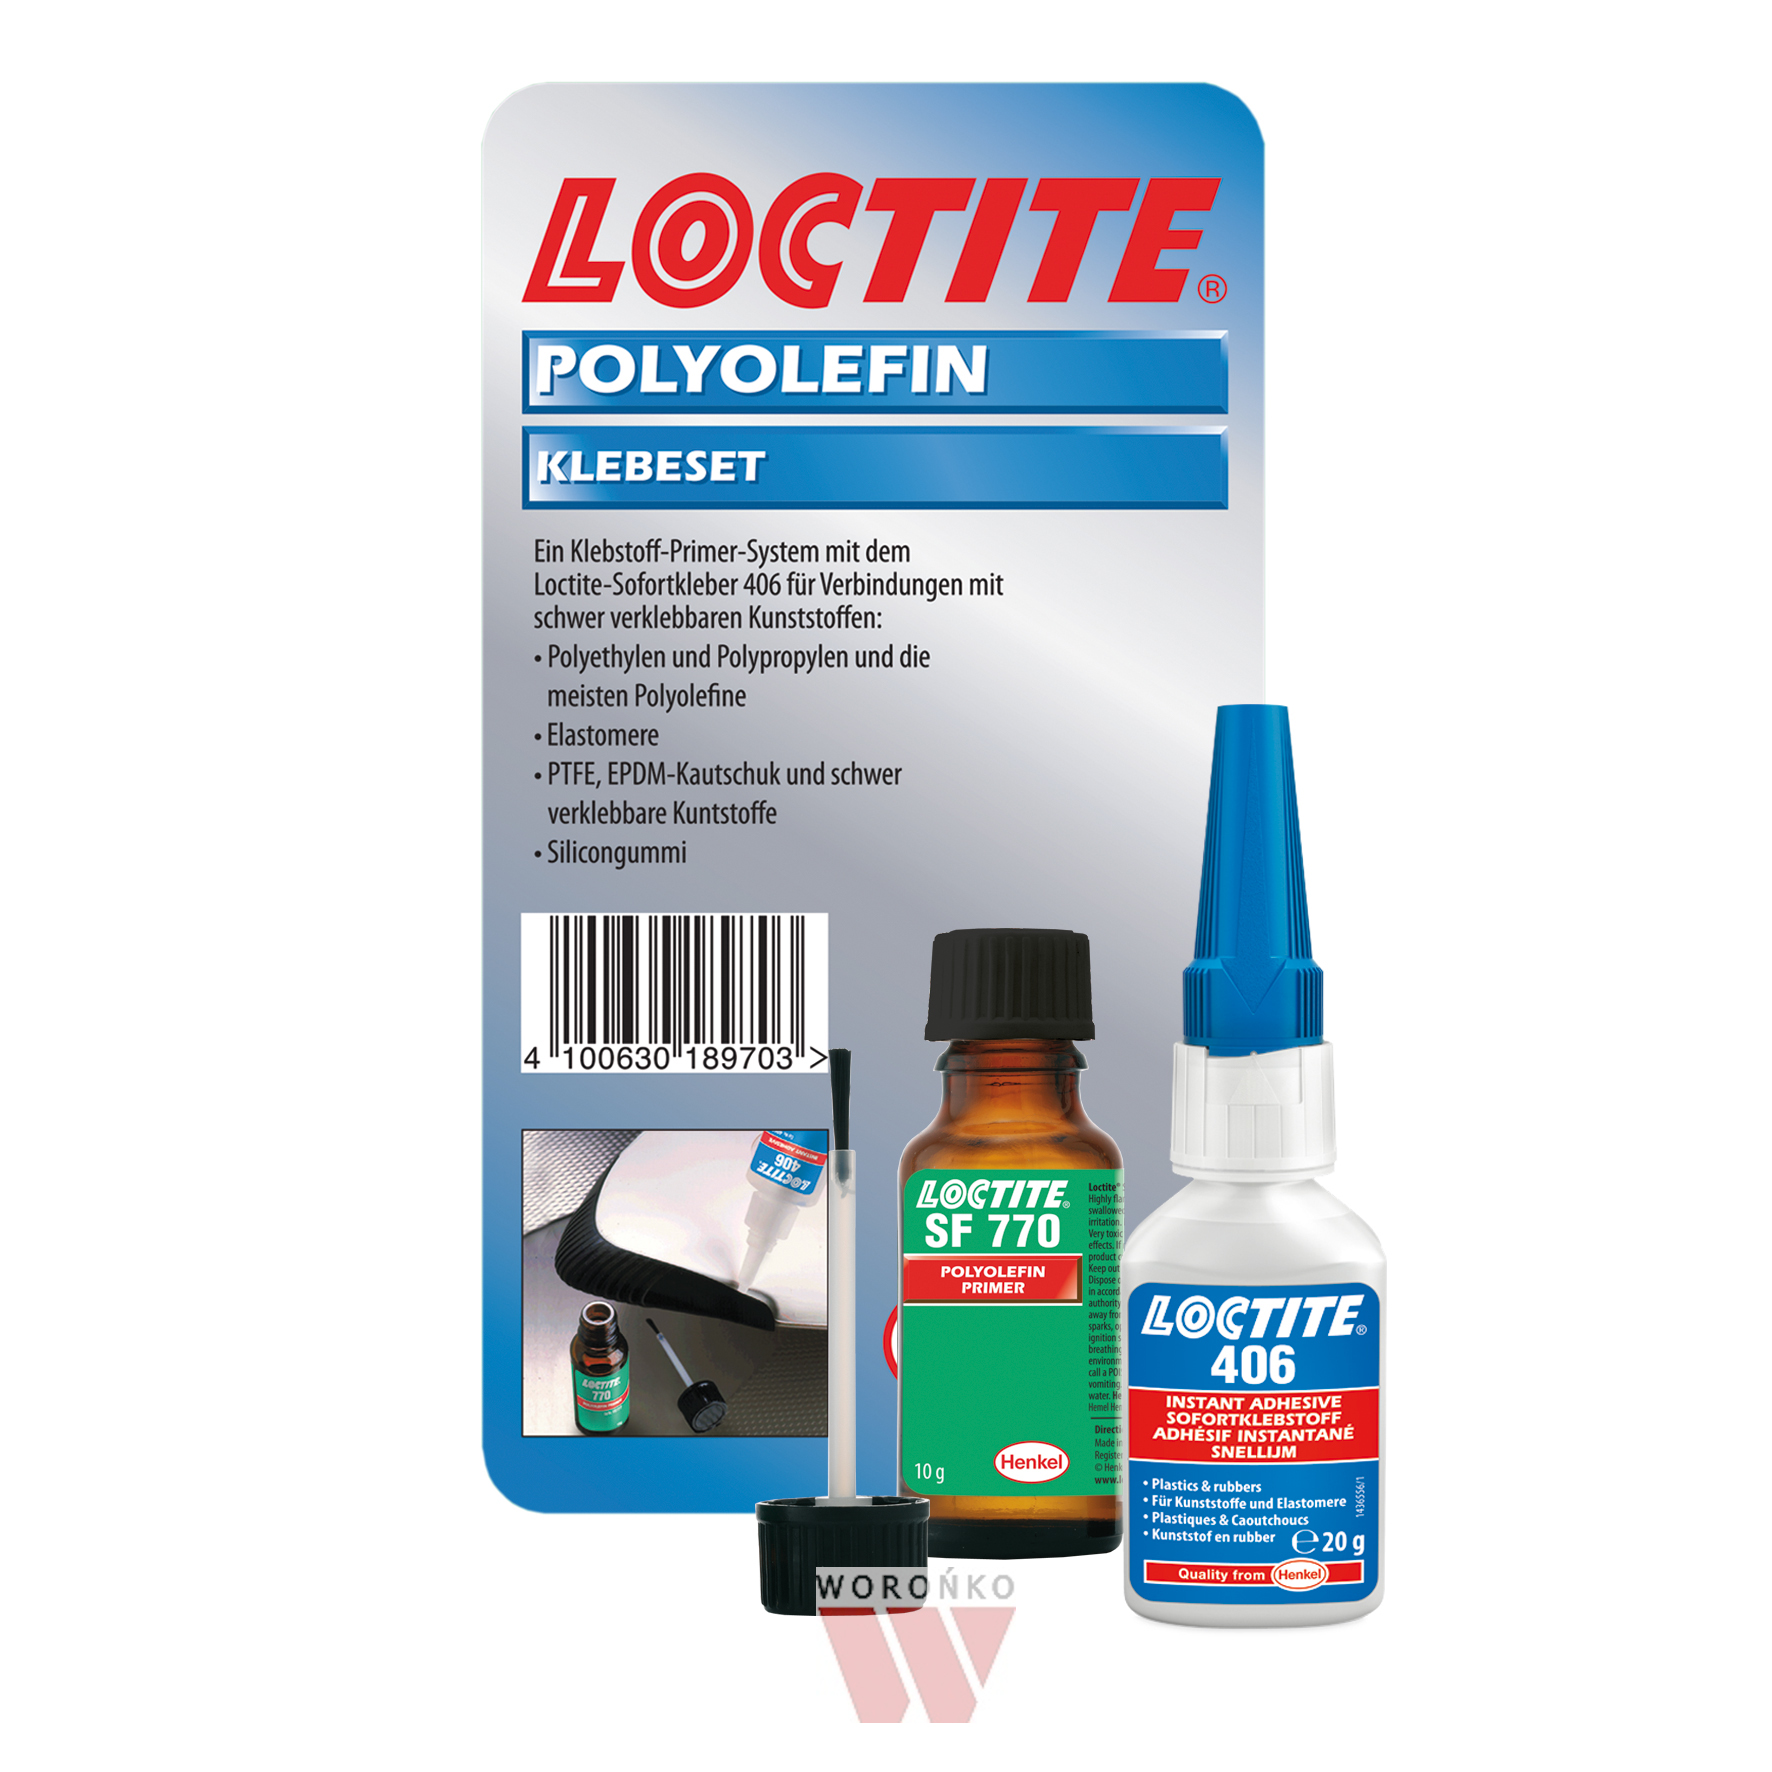 Loctite 406 20g + Primer 770 50ml bundle